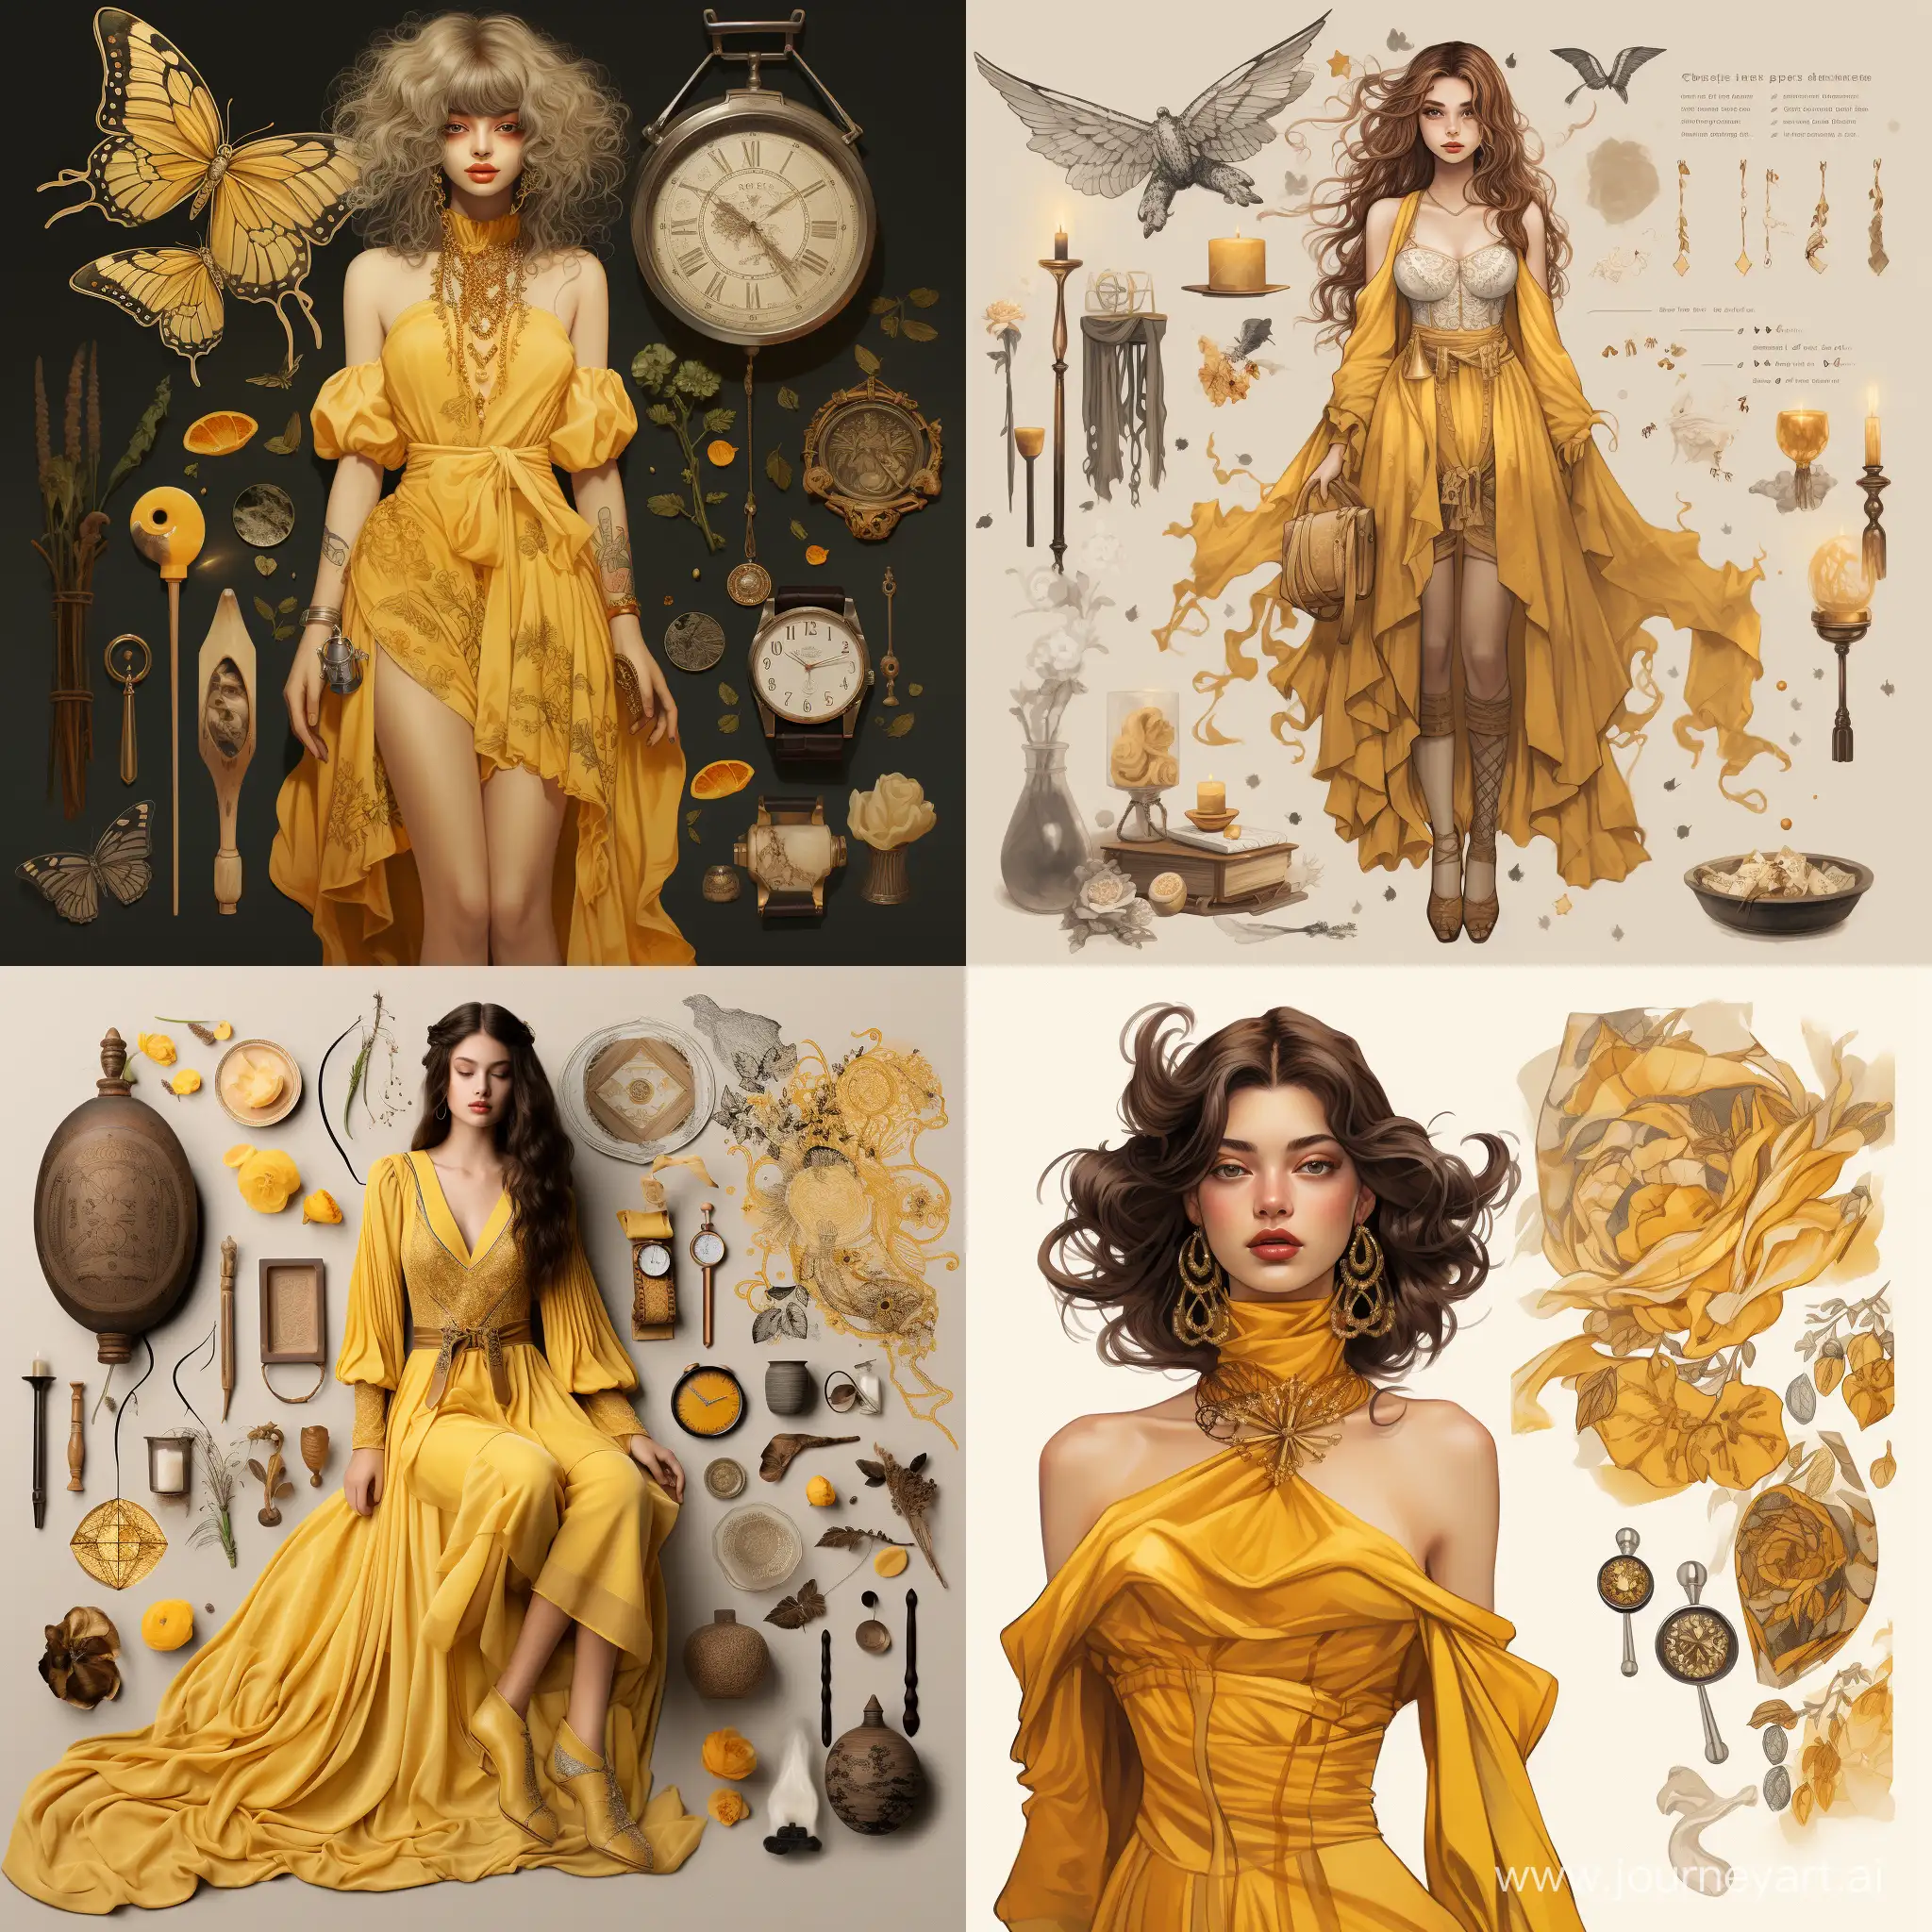 reference sheet with accessories, жёлтое платье с узорами, стиль фэнтези 